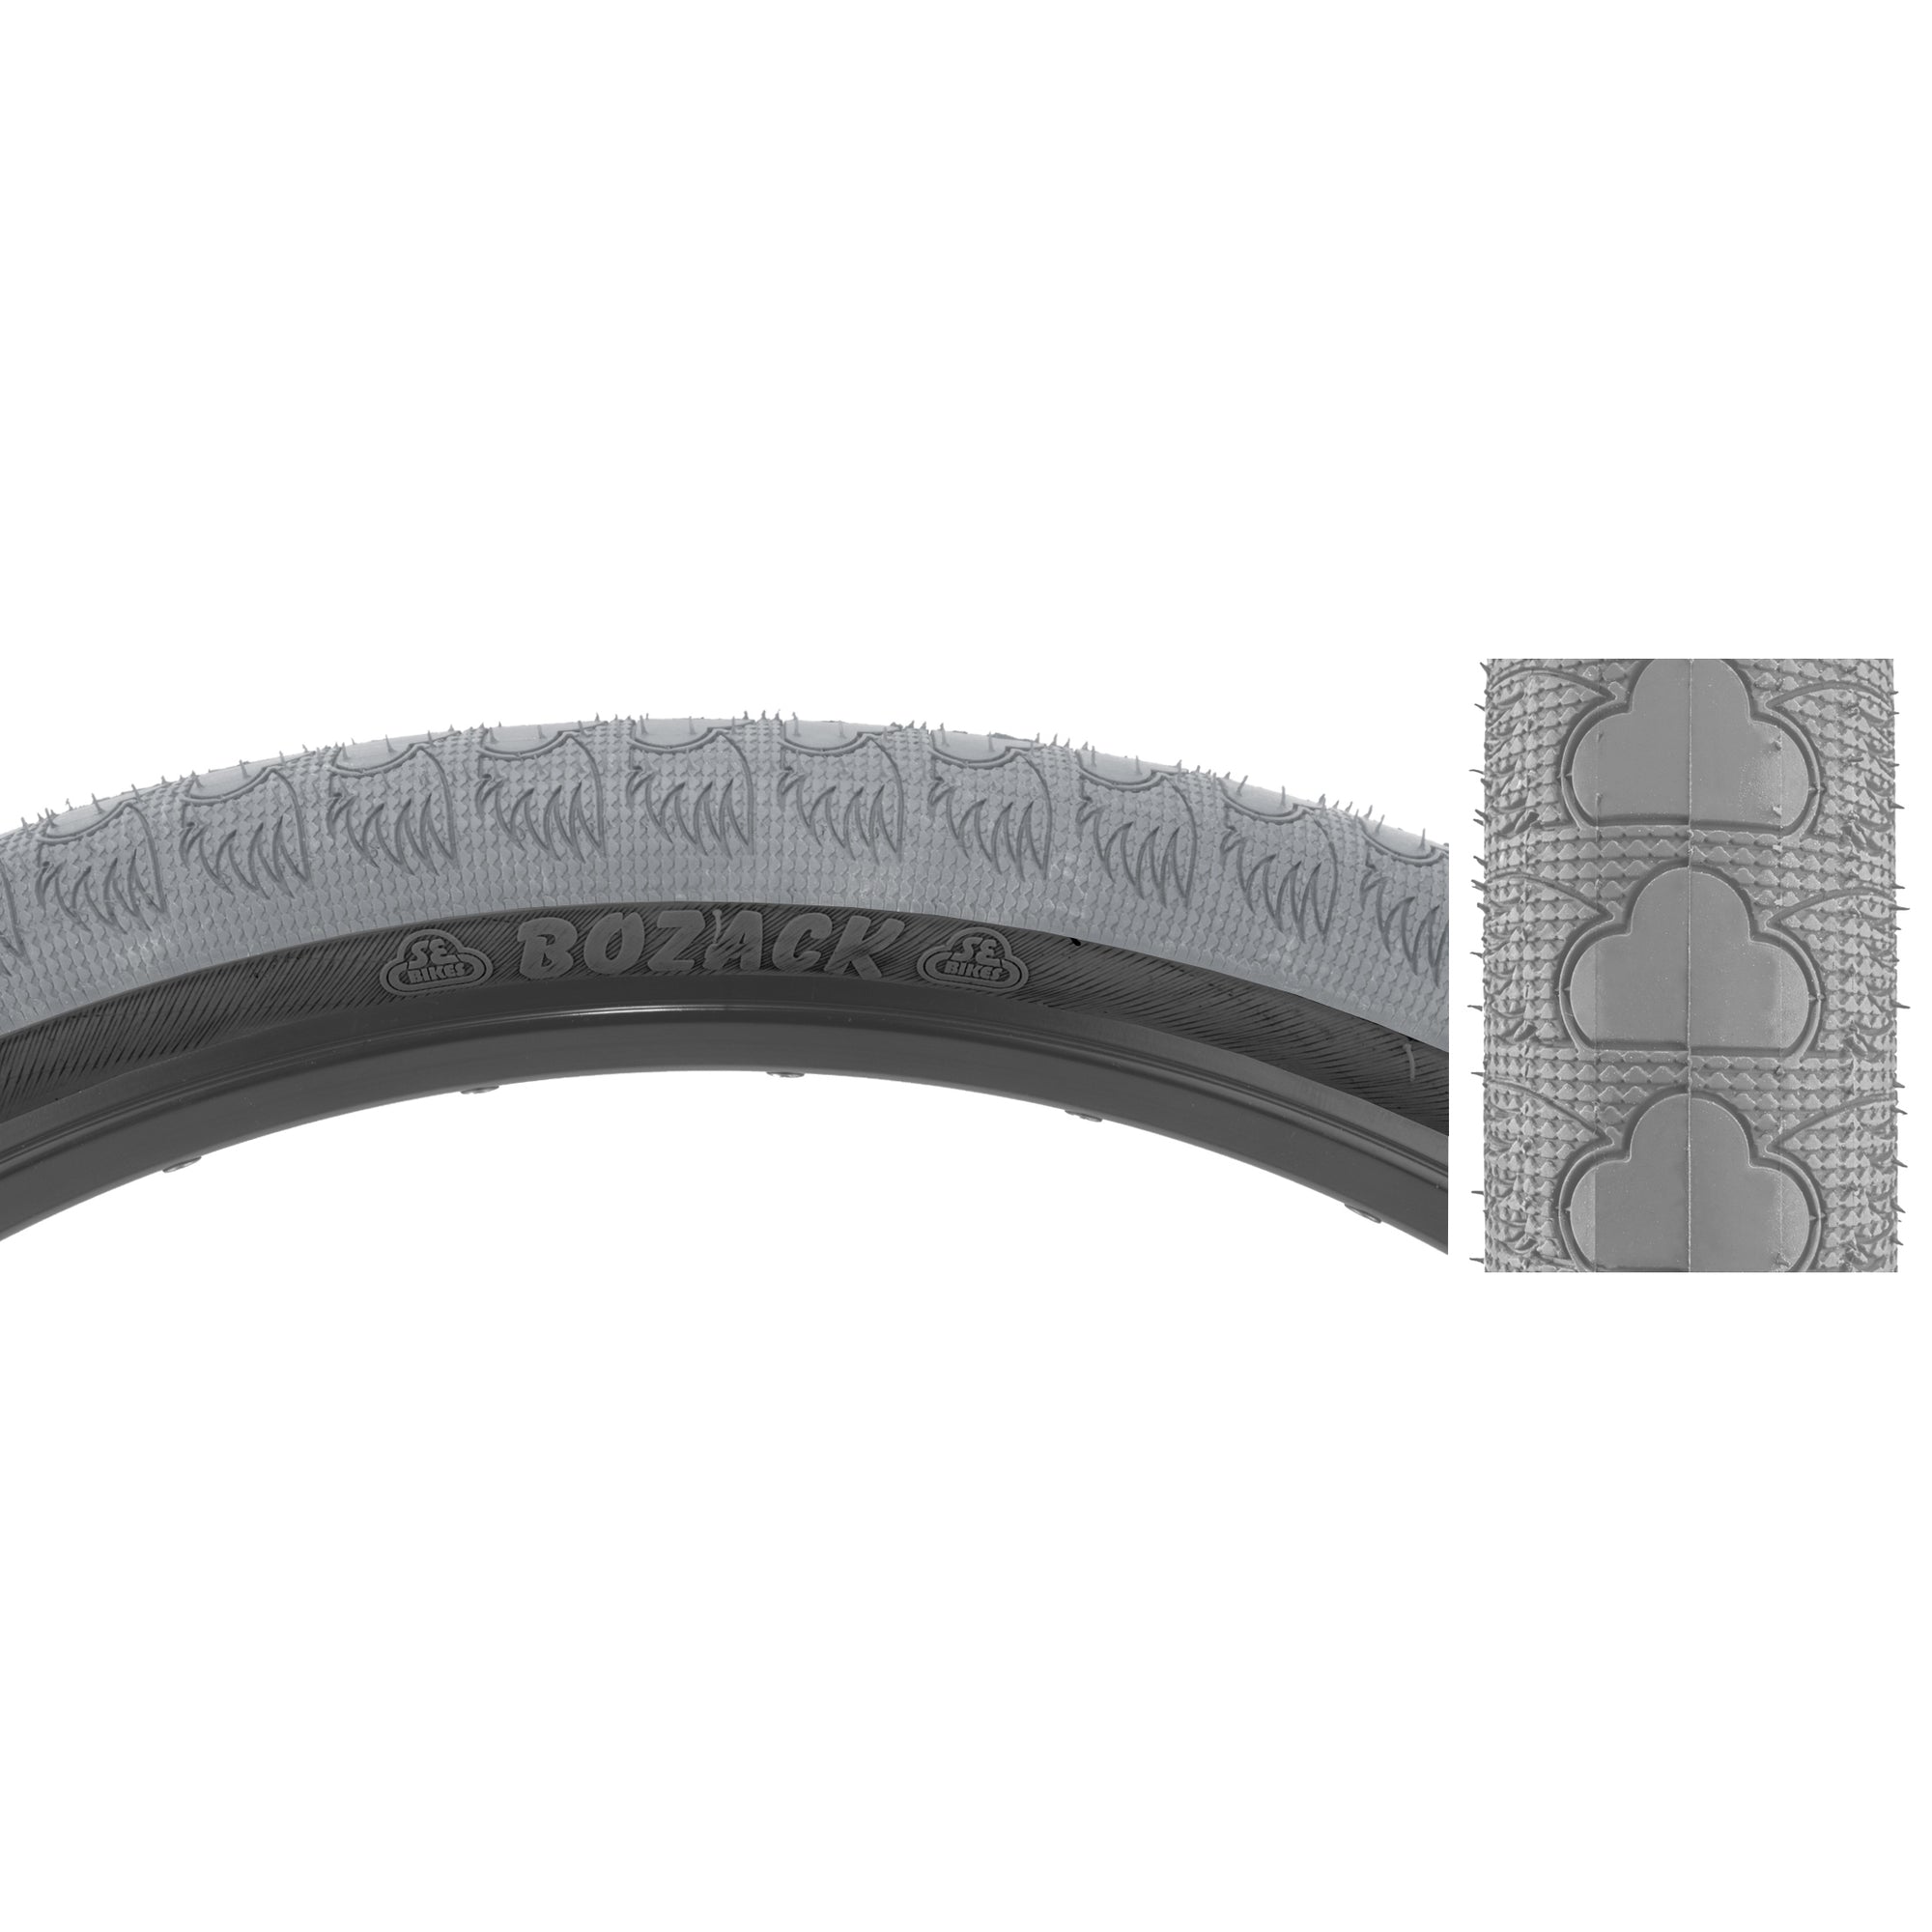 29x2.4 SE Racing Bozack BMX Tire - Gray w/ Black Sidewall